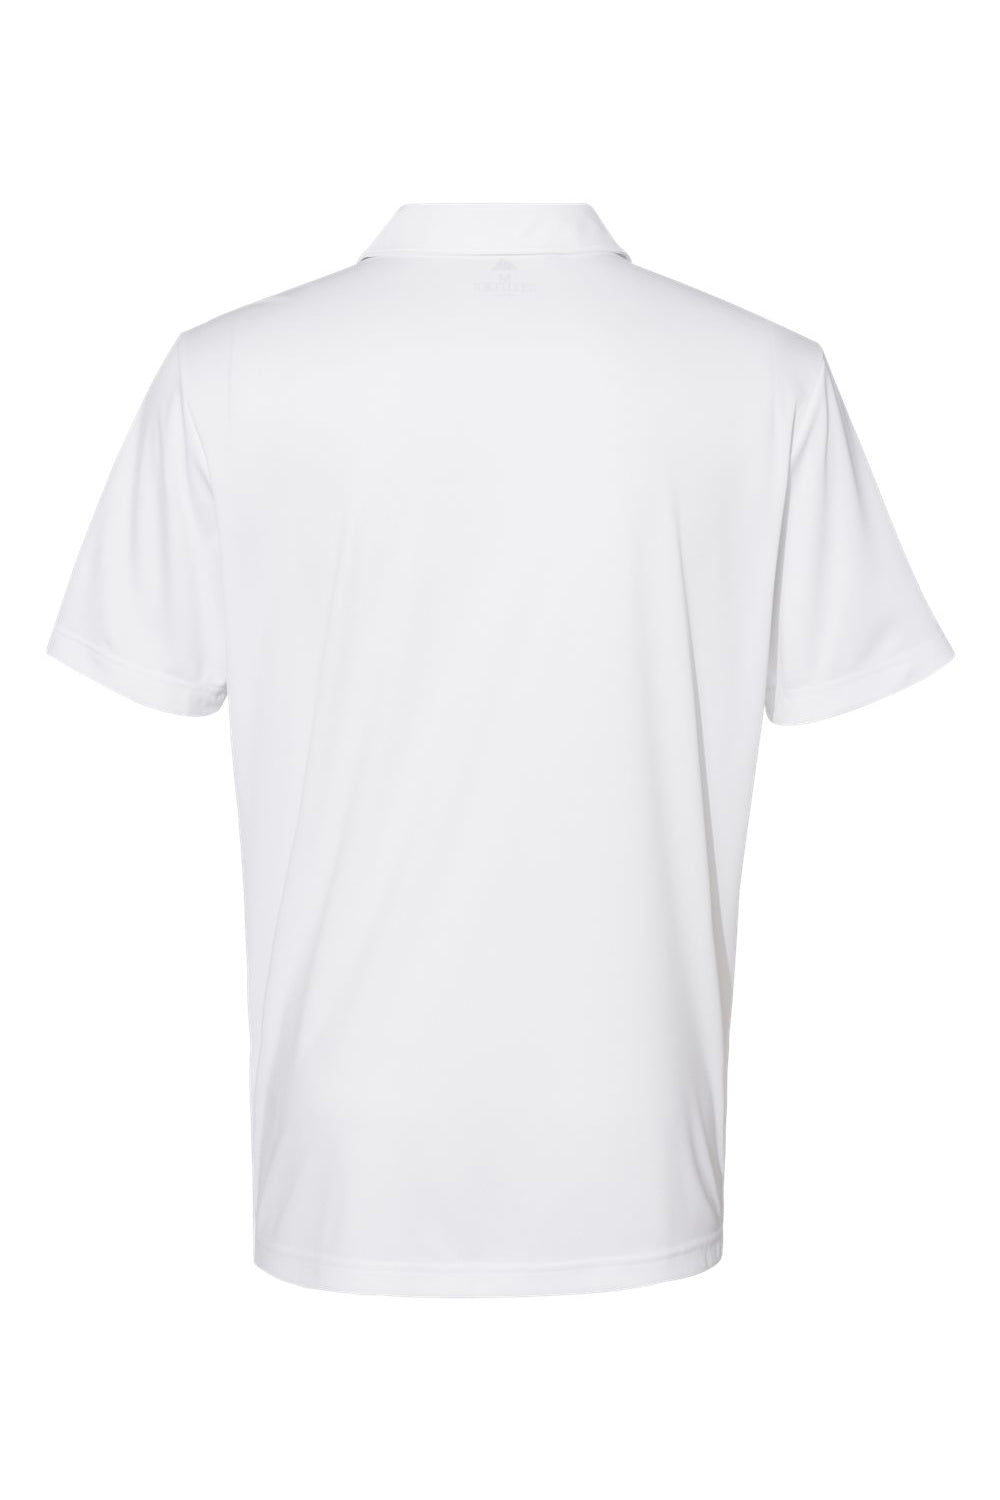 Adidas A324 Mens 3 Stripes UPF 50+ Short Sleeve Polo Shirt White/Black Flat Back